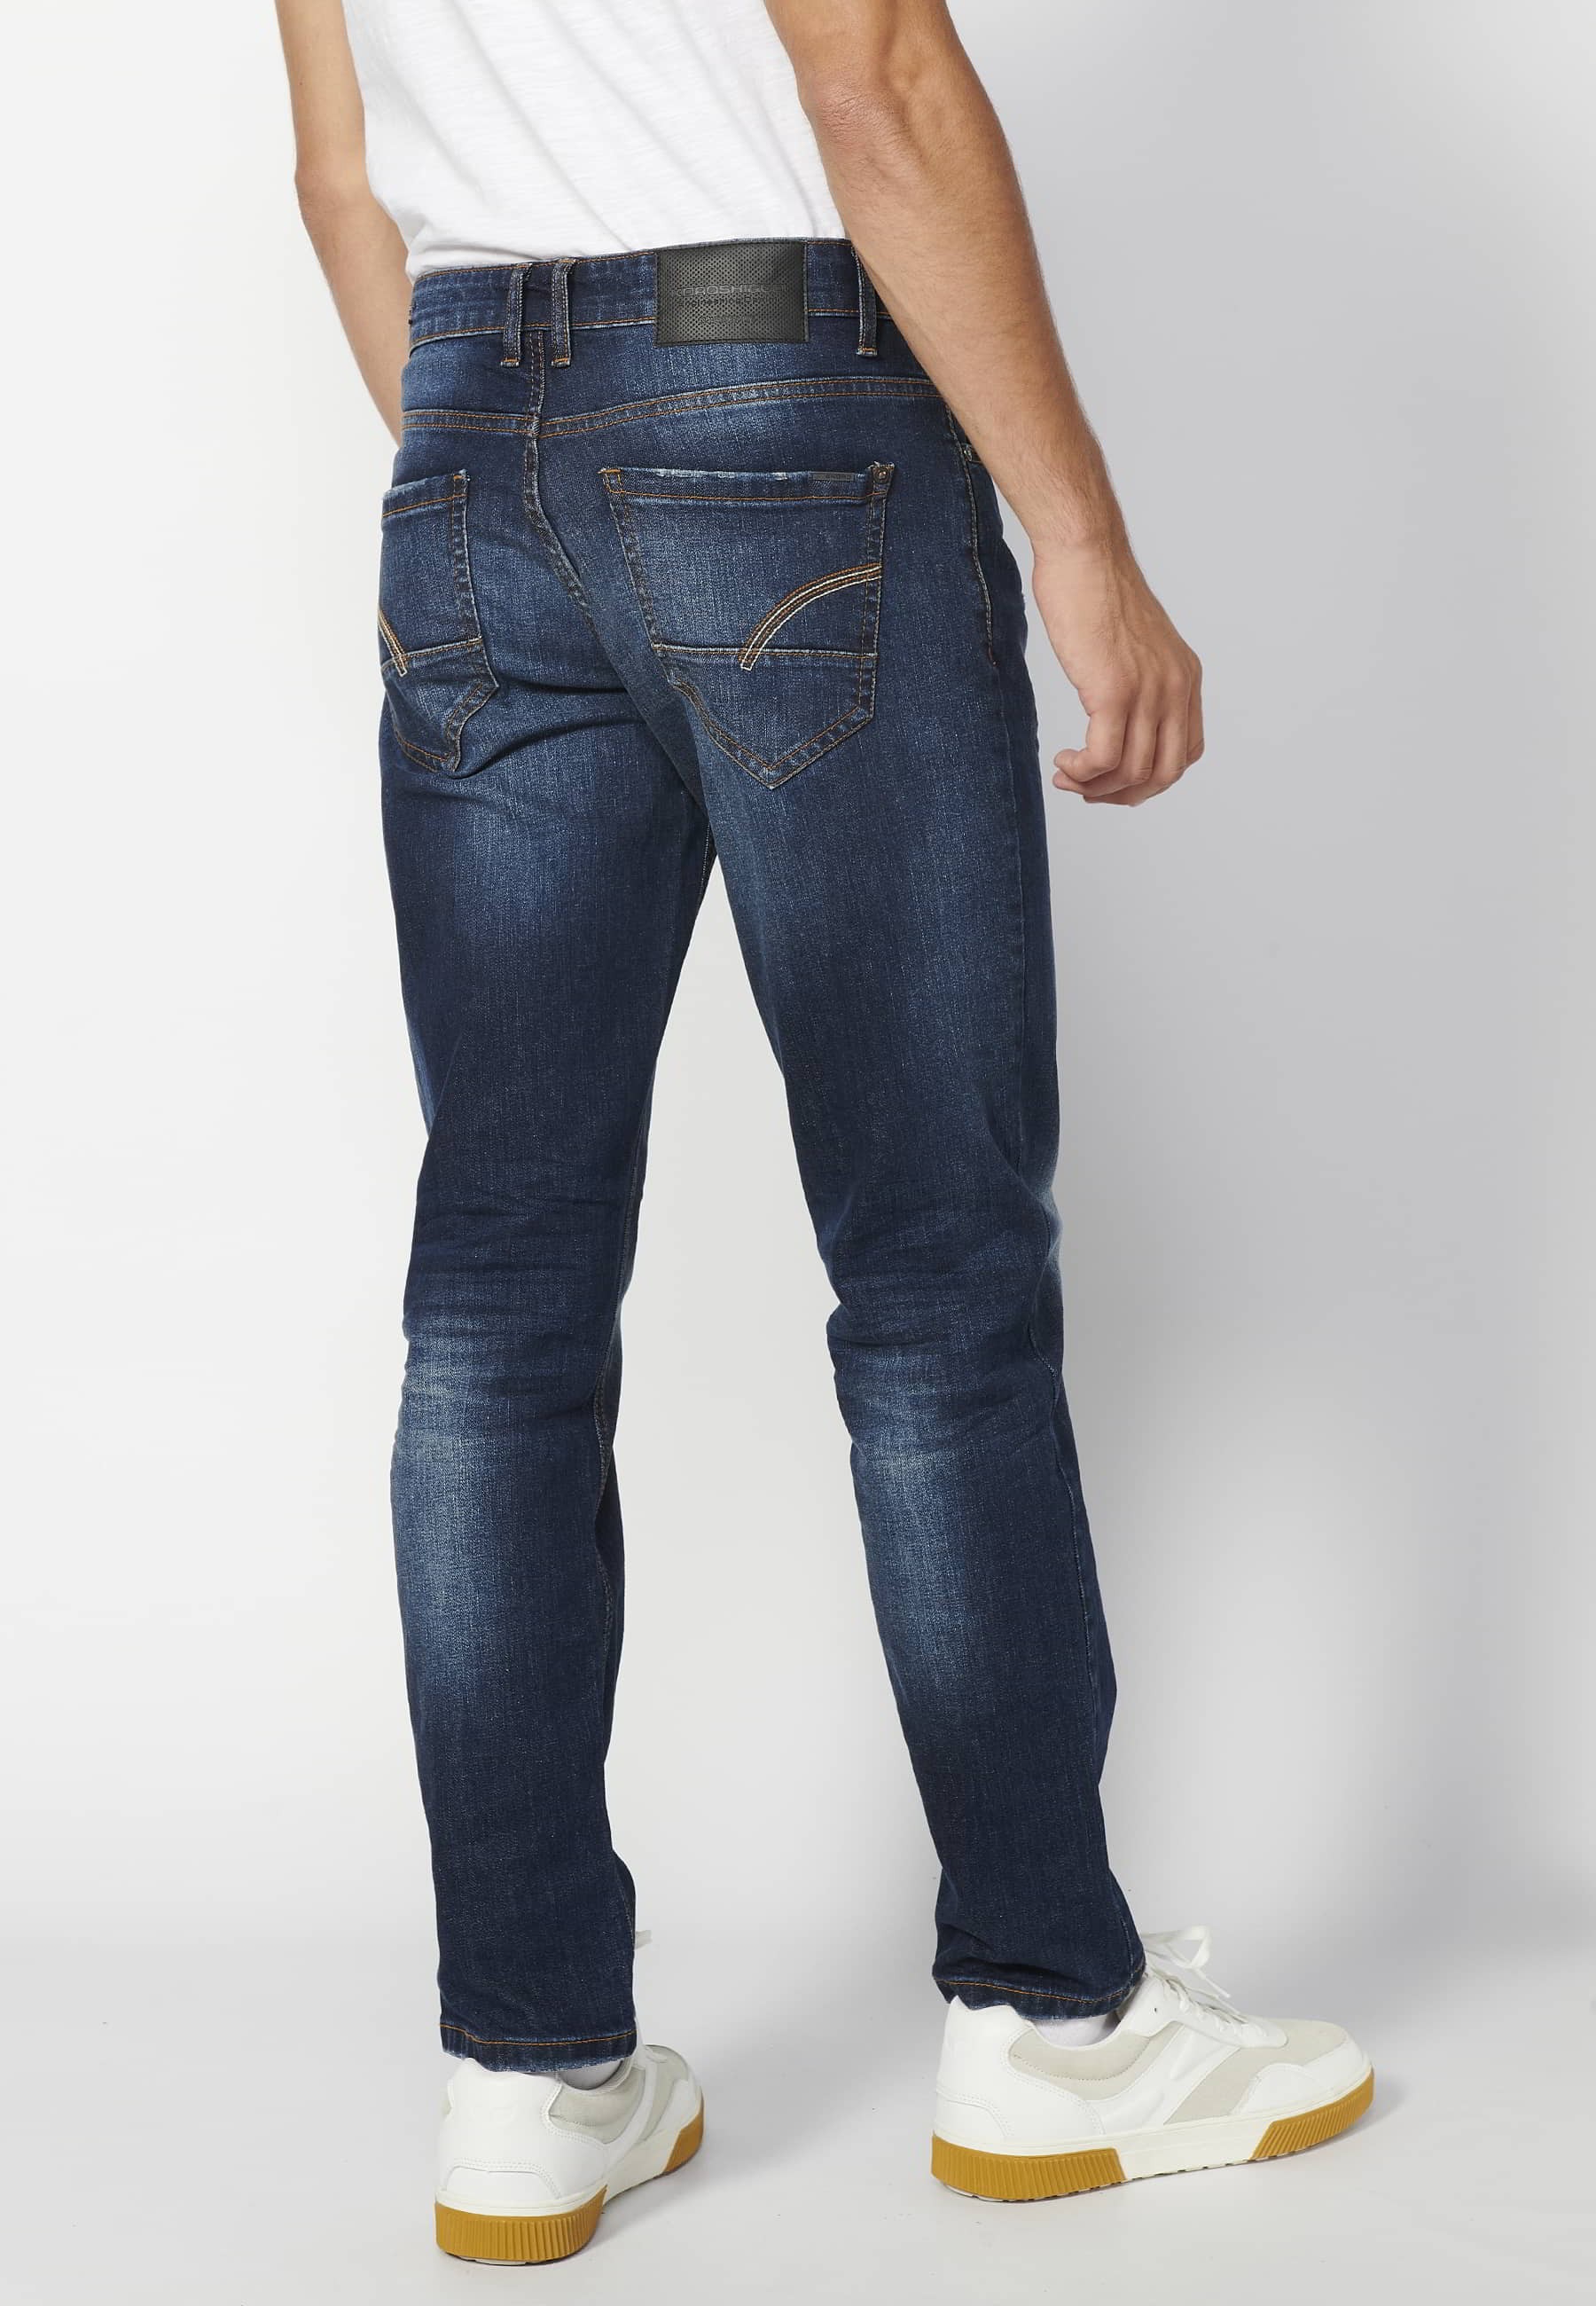 Pantalón largo jeans straigth regular fit, color Azul Medio, para hombres